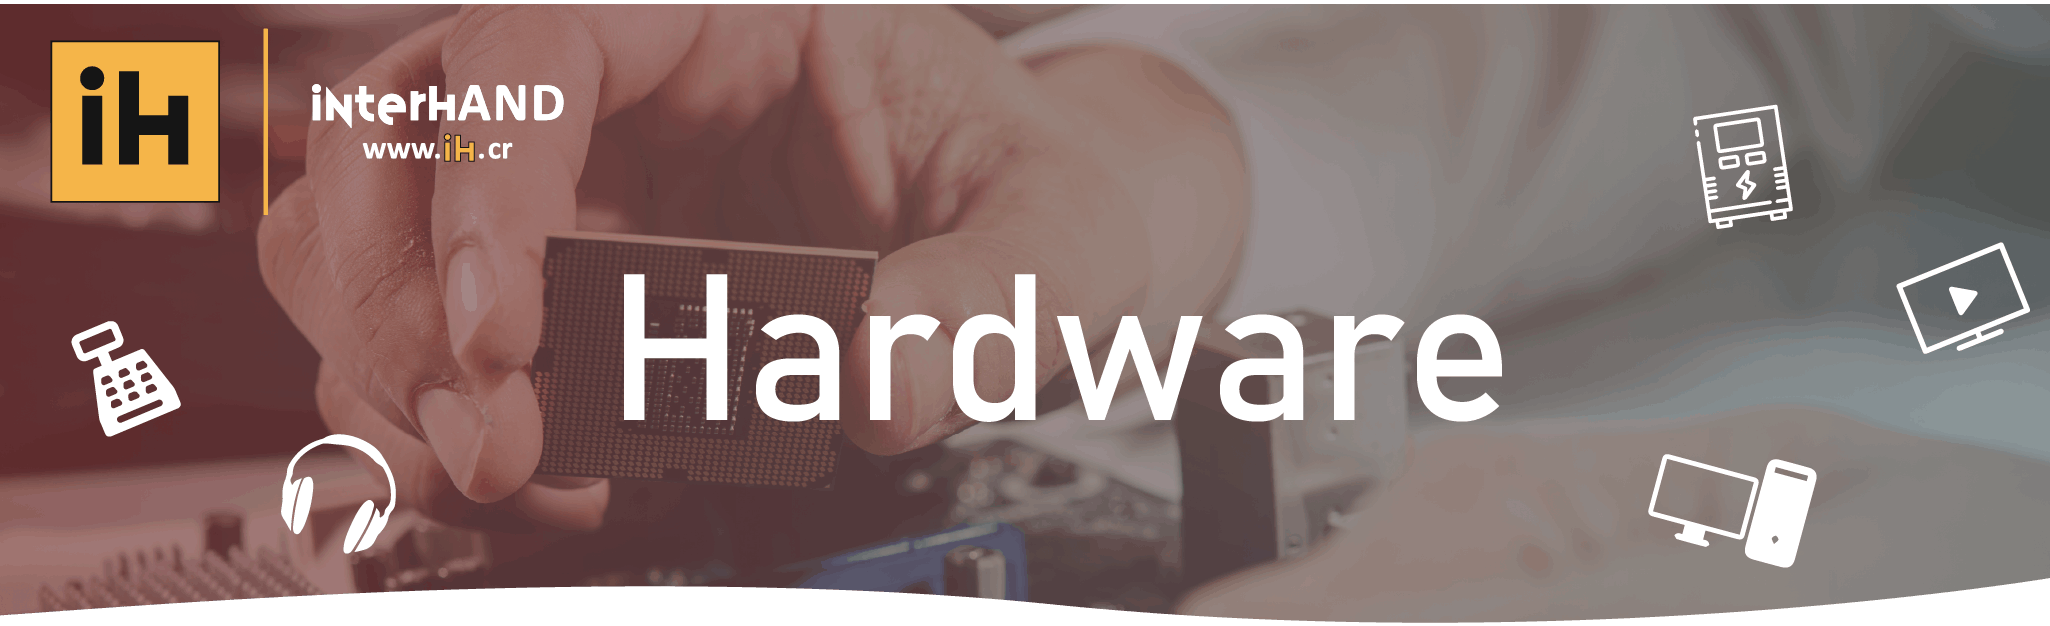 Hardware Brindados por InterHAND S. A.